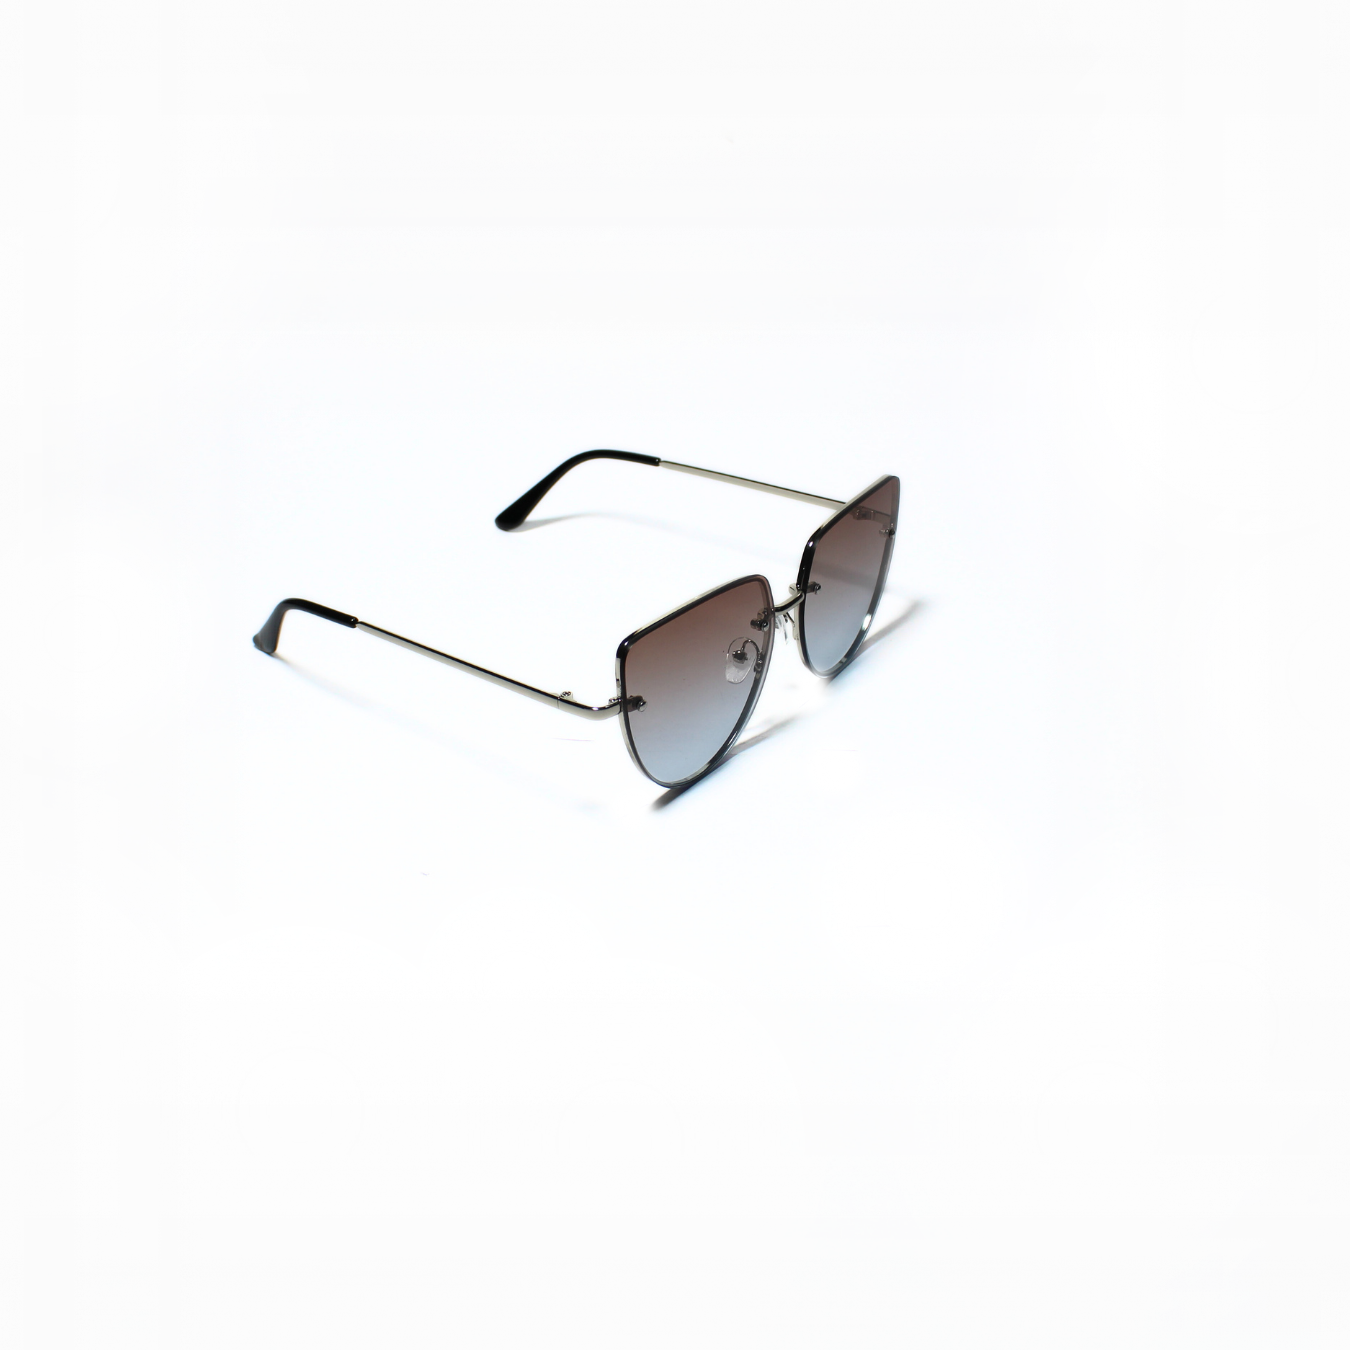 HANNAH 004 I Sunglasses for Women - Specsview